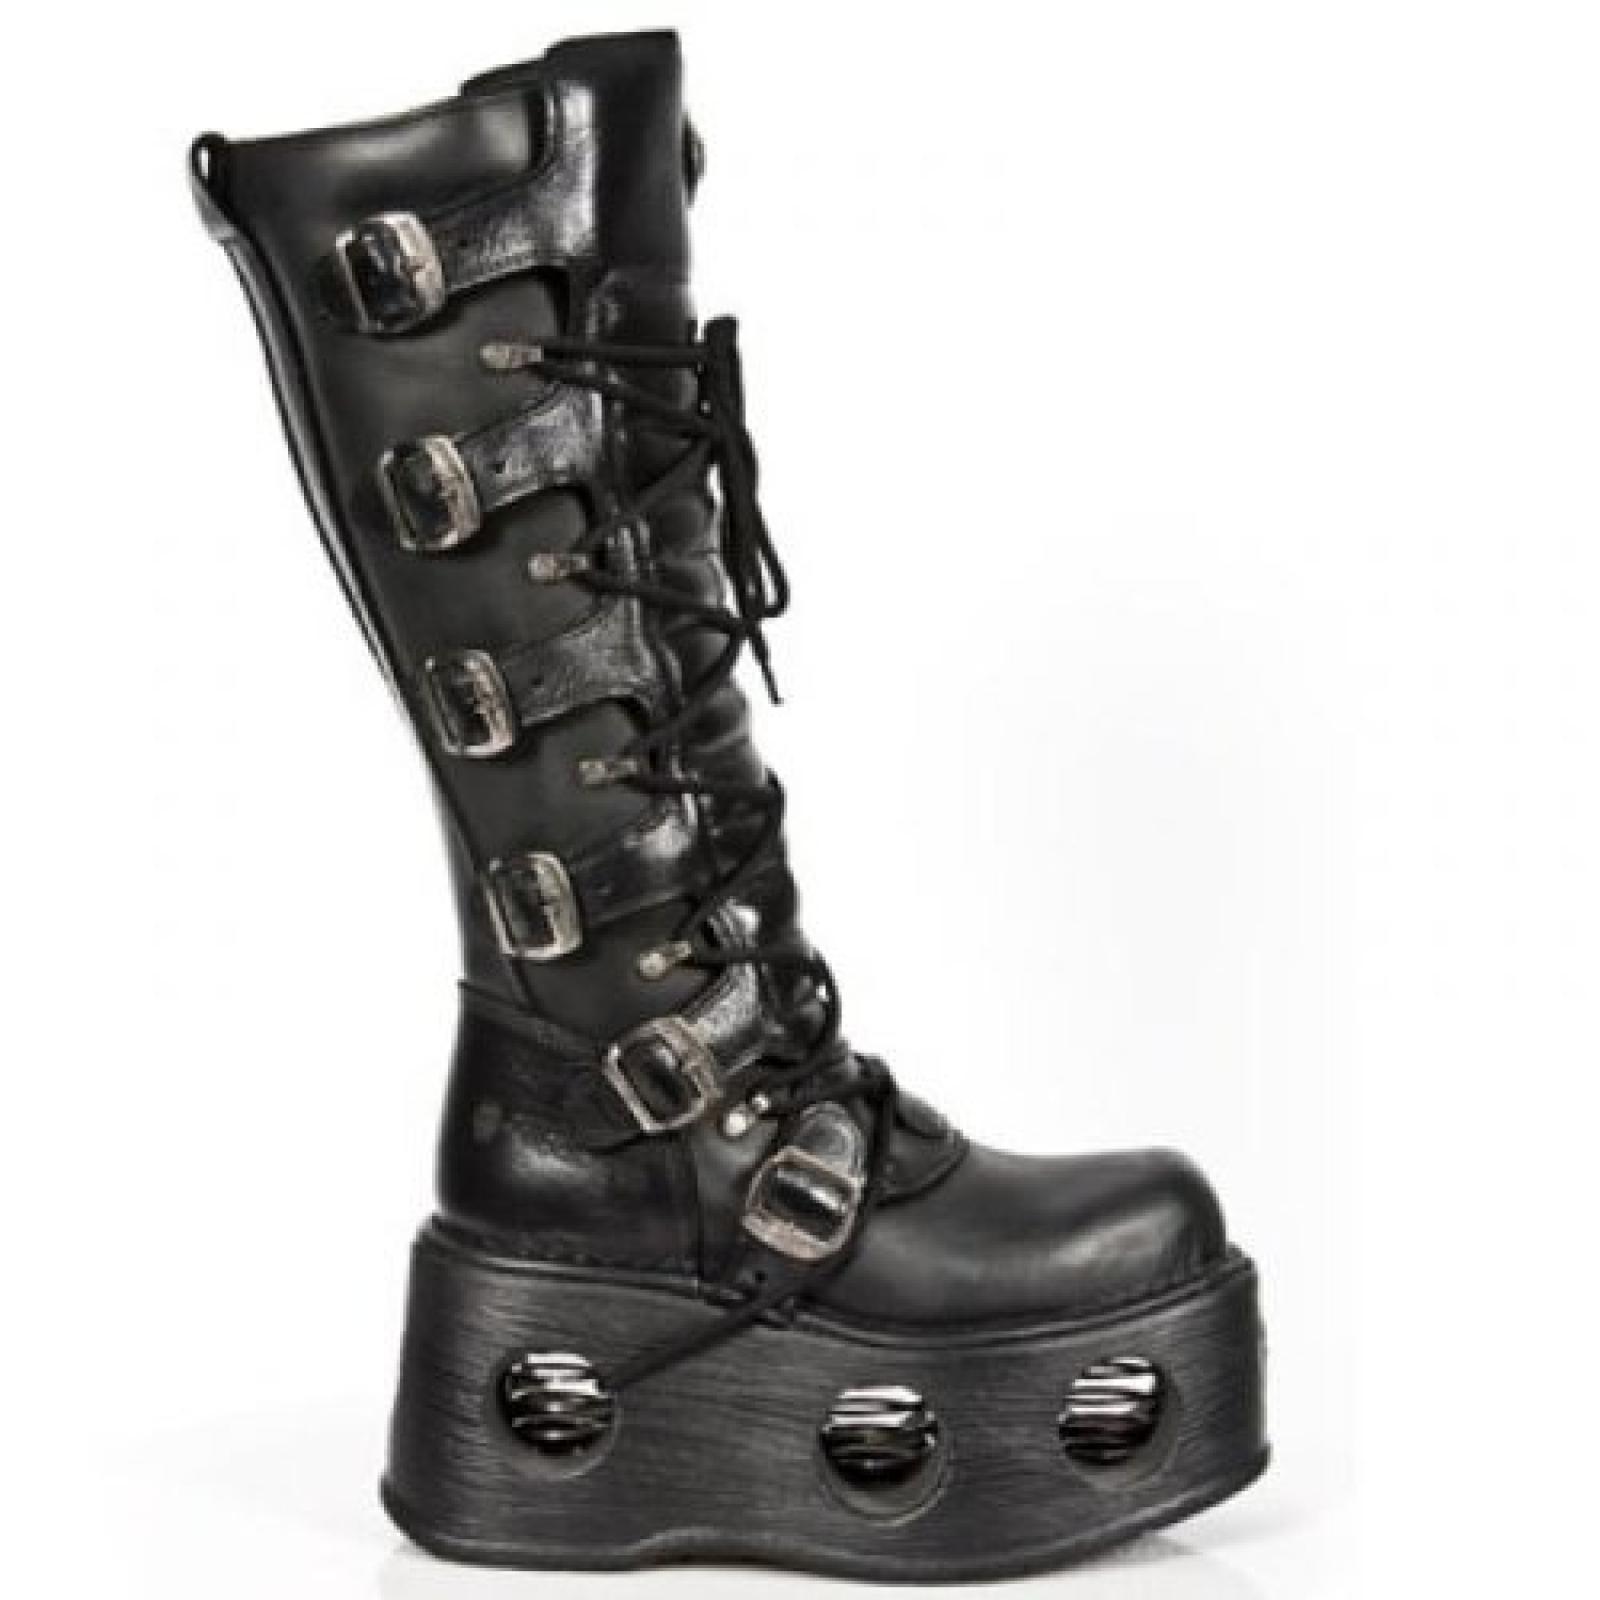 New Rock Boots Lederstiefel schwarz Style 272 